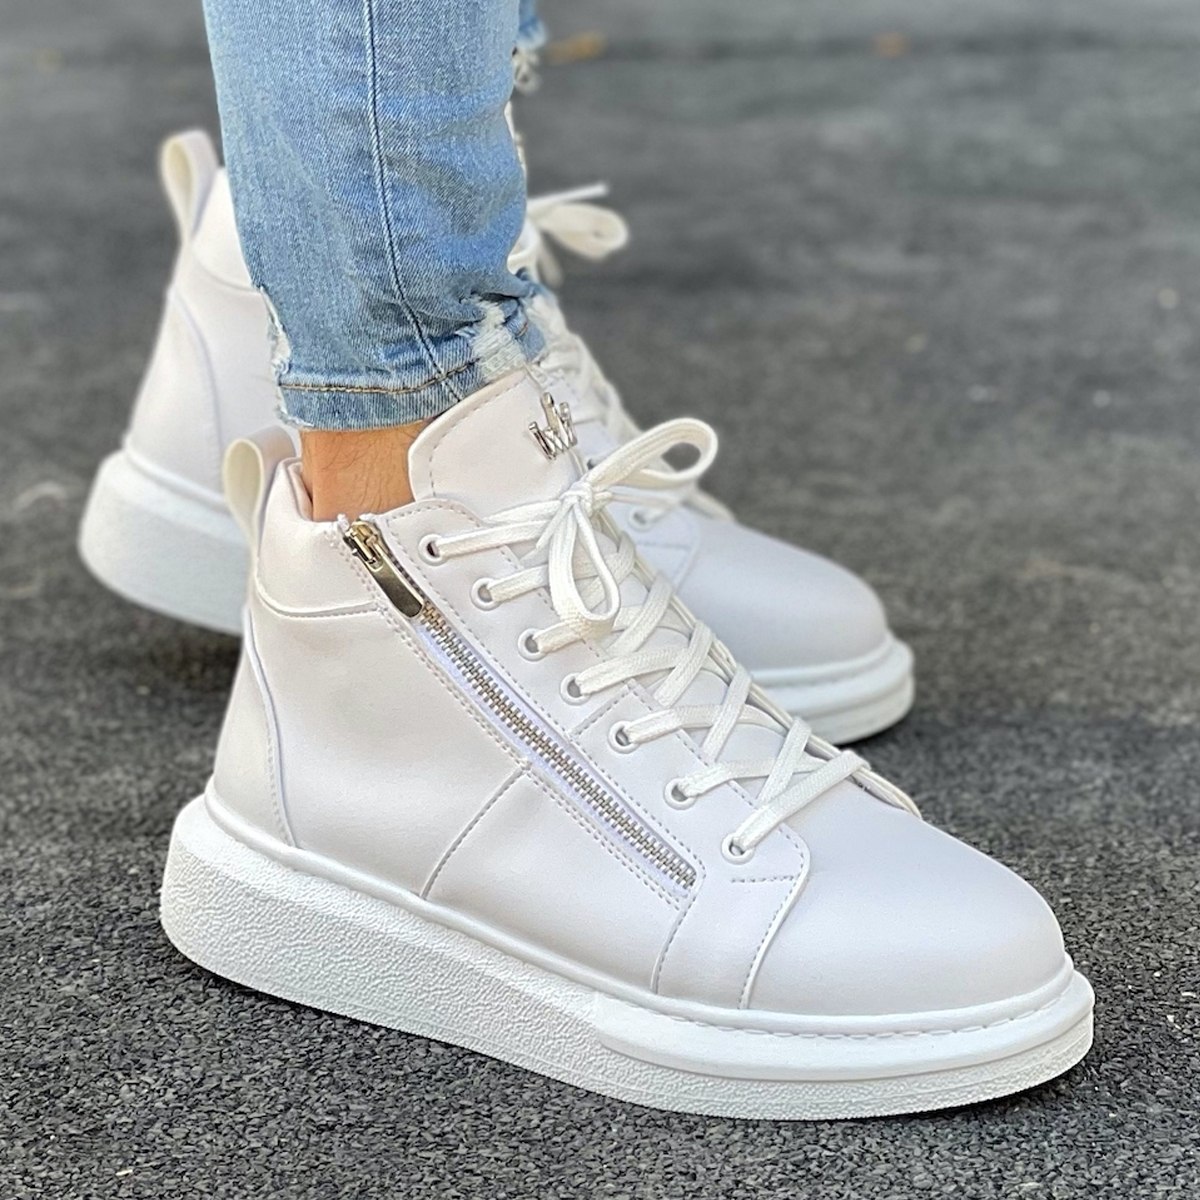 Men’s High Top Sneakers Designer Zipper Shoes White